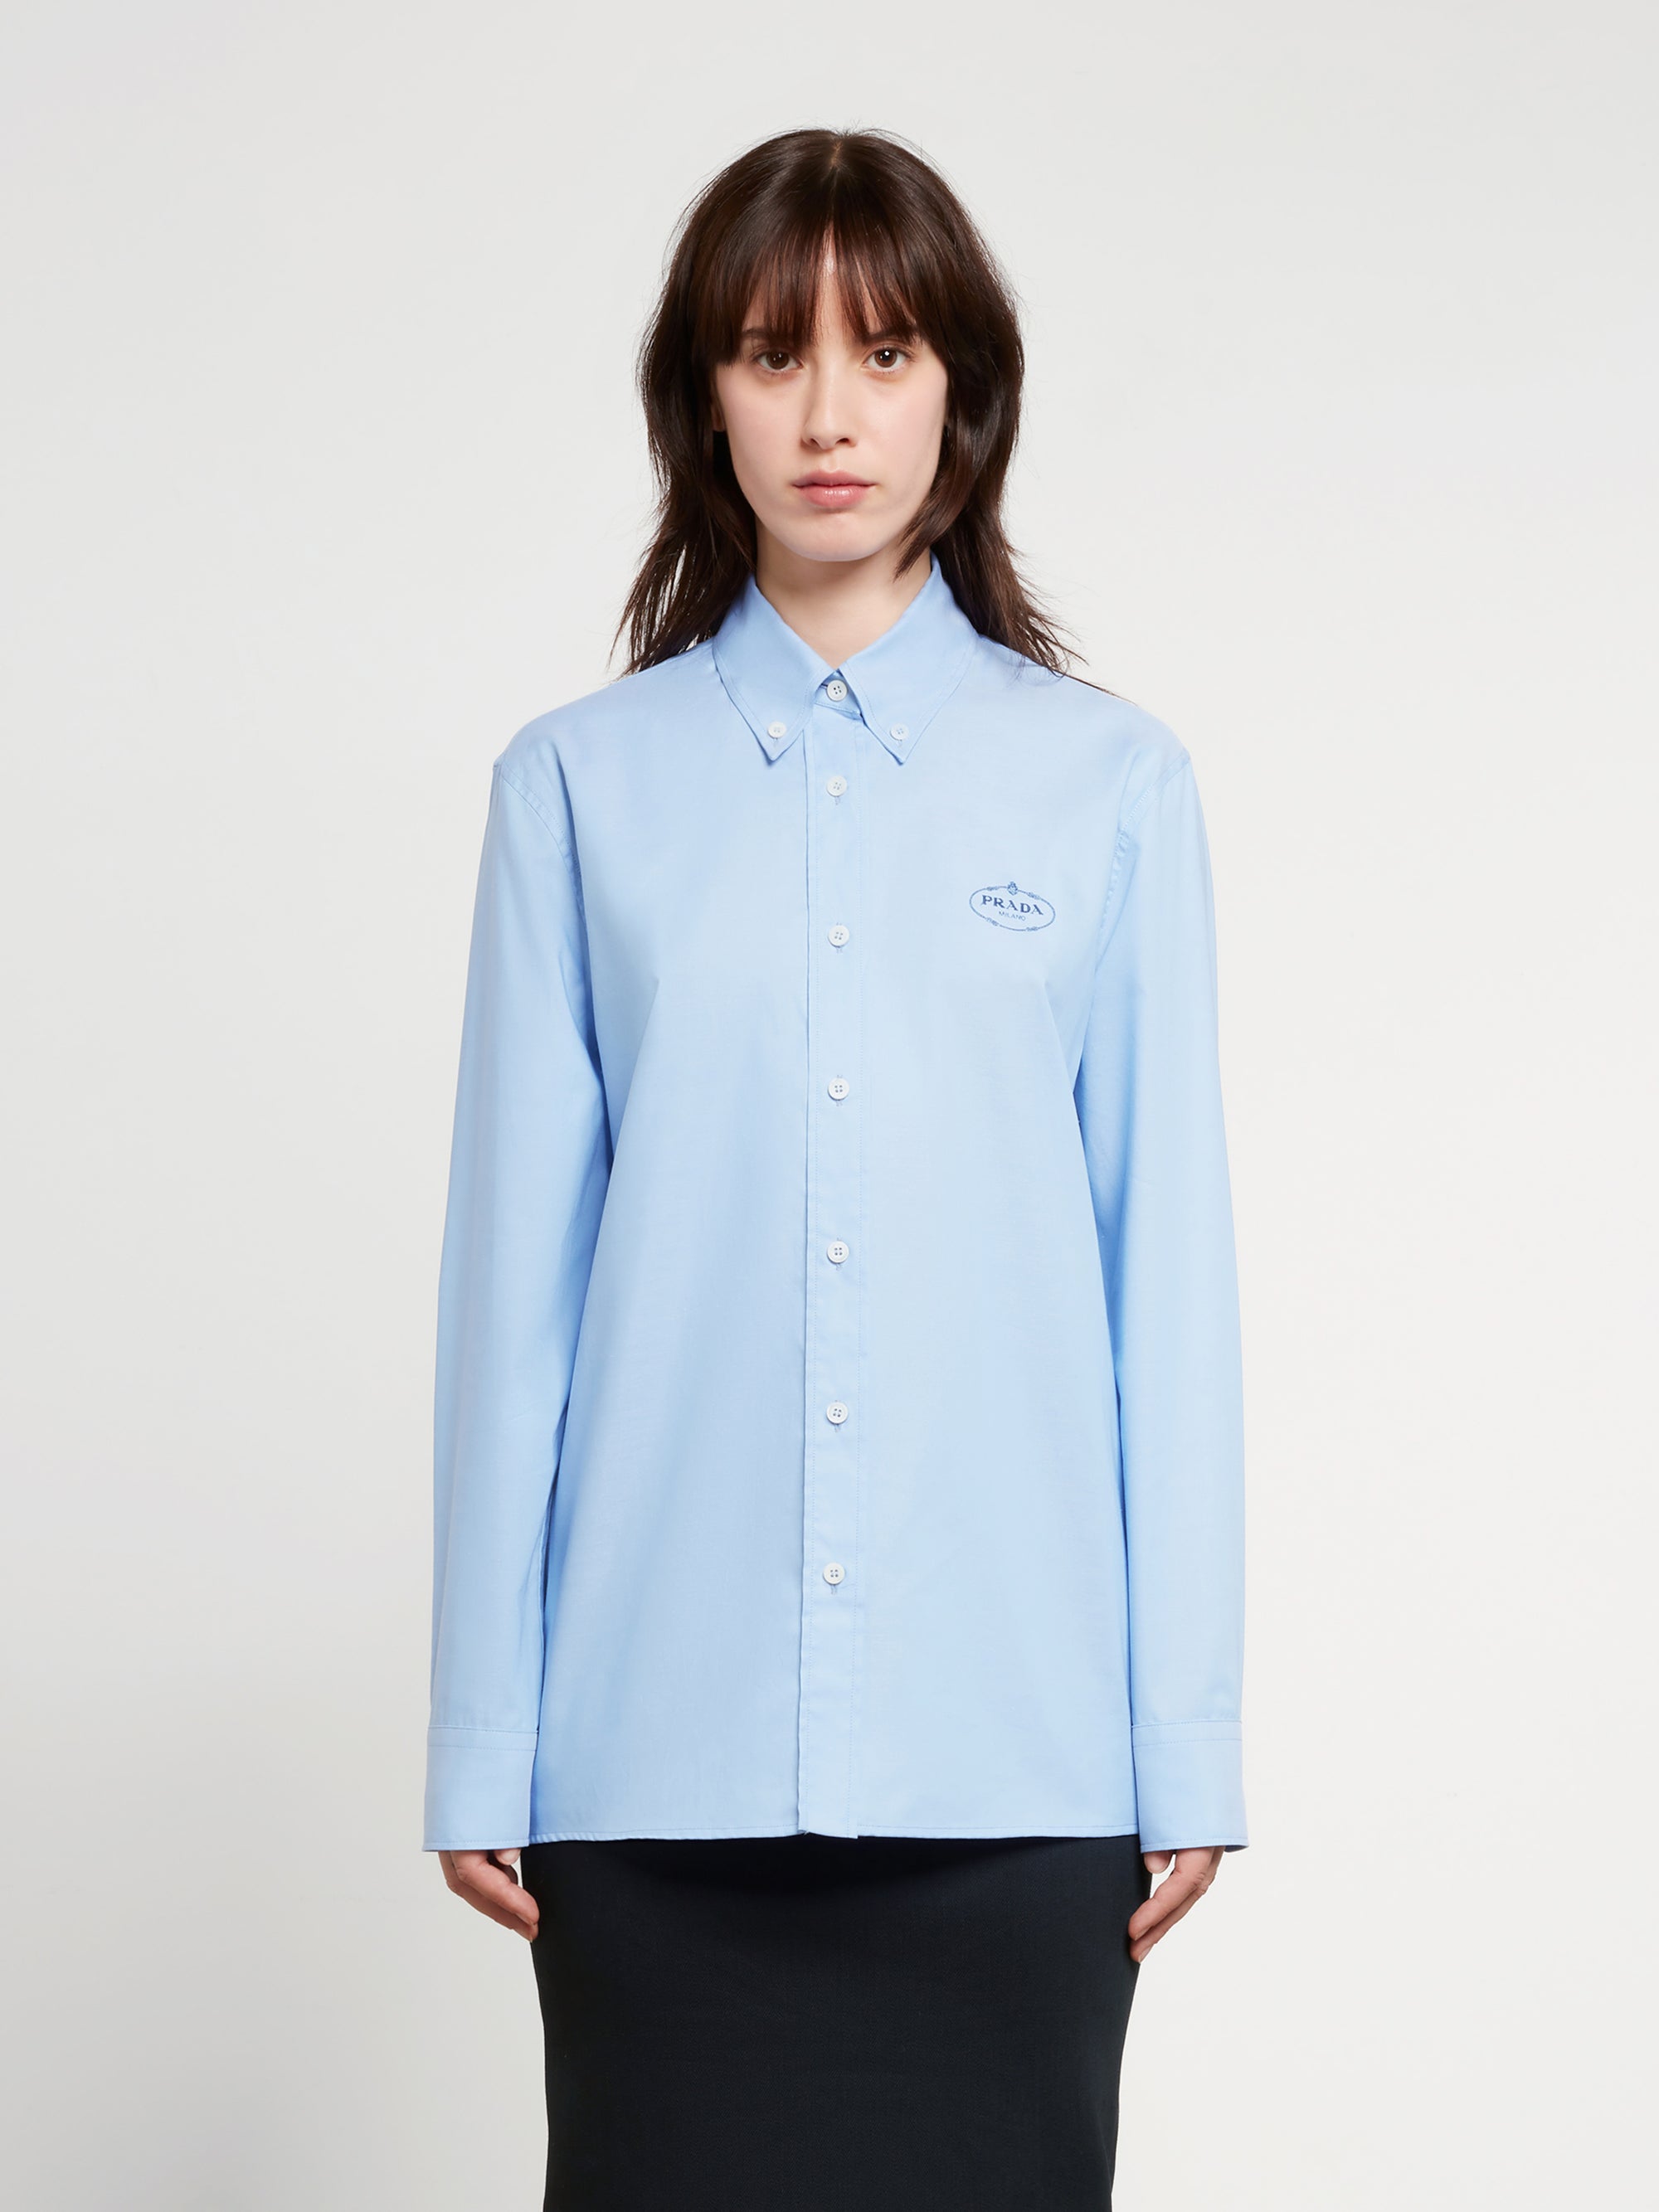 Prada - Women’s Oxford Cotton Shirt - (Light Blue)